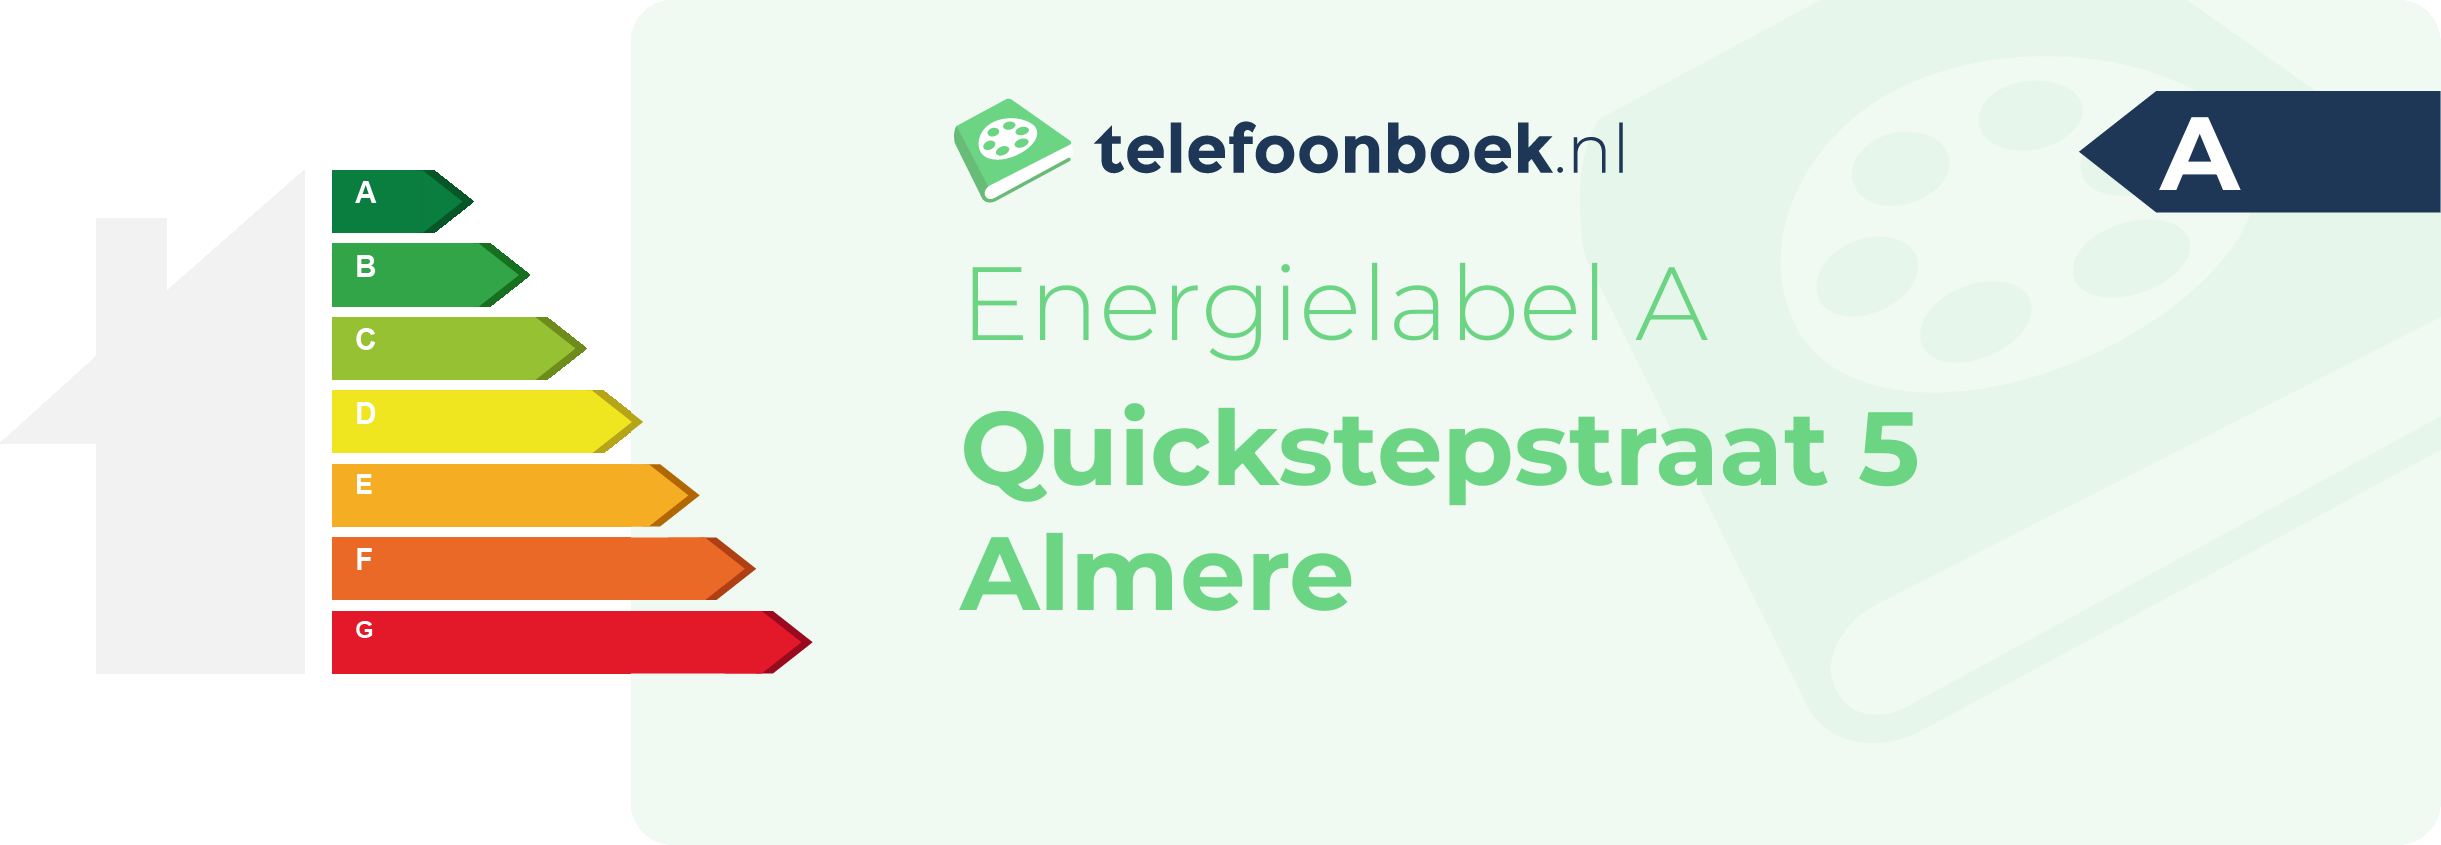 Energielabel Quickstepstraat 5 Almere